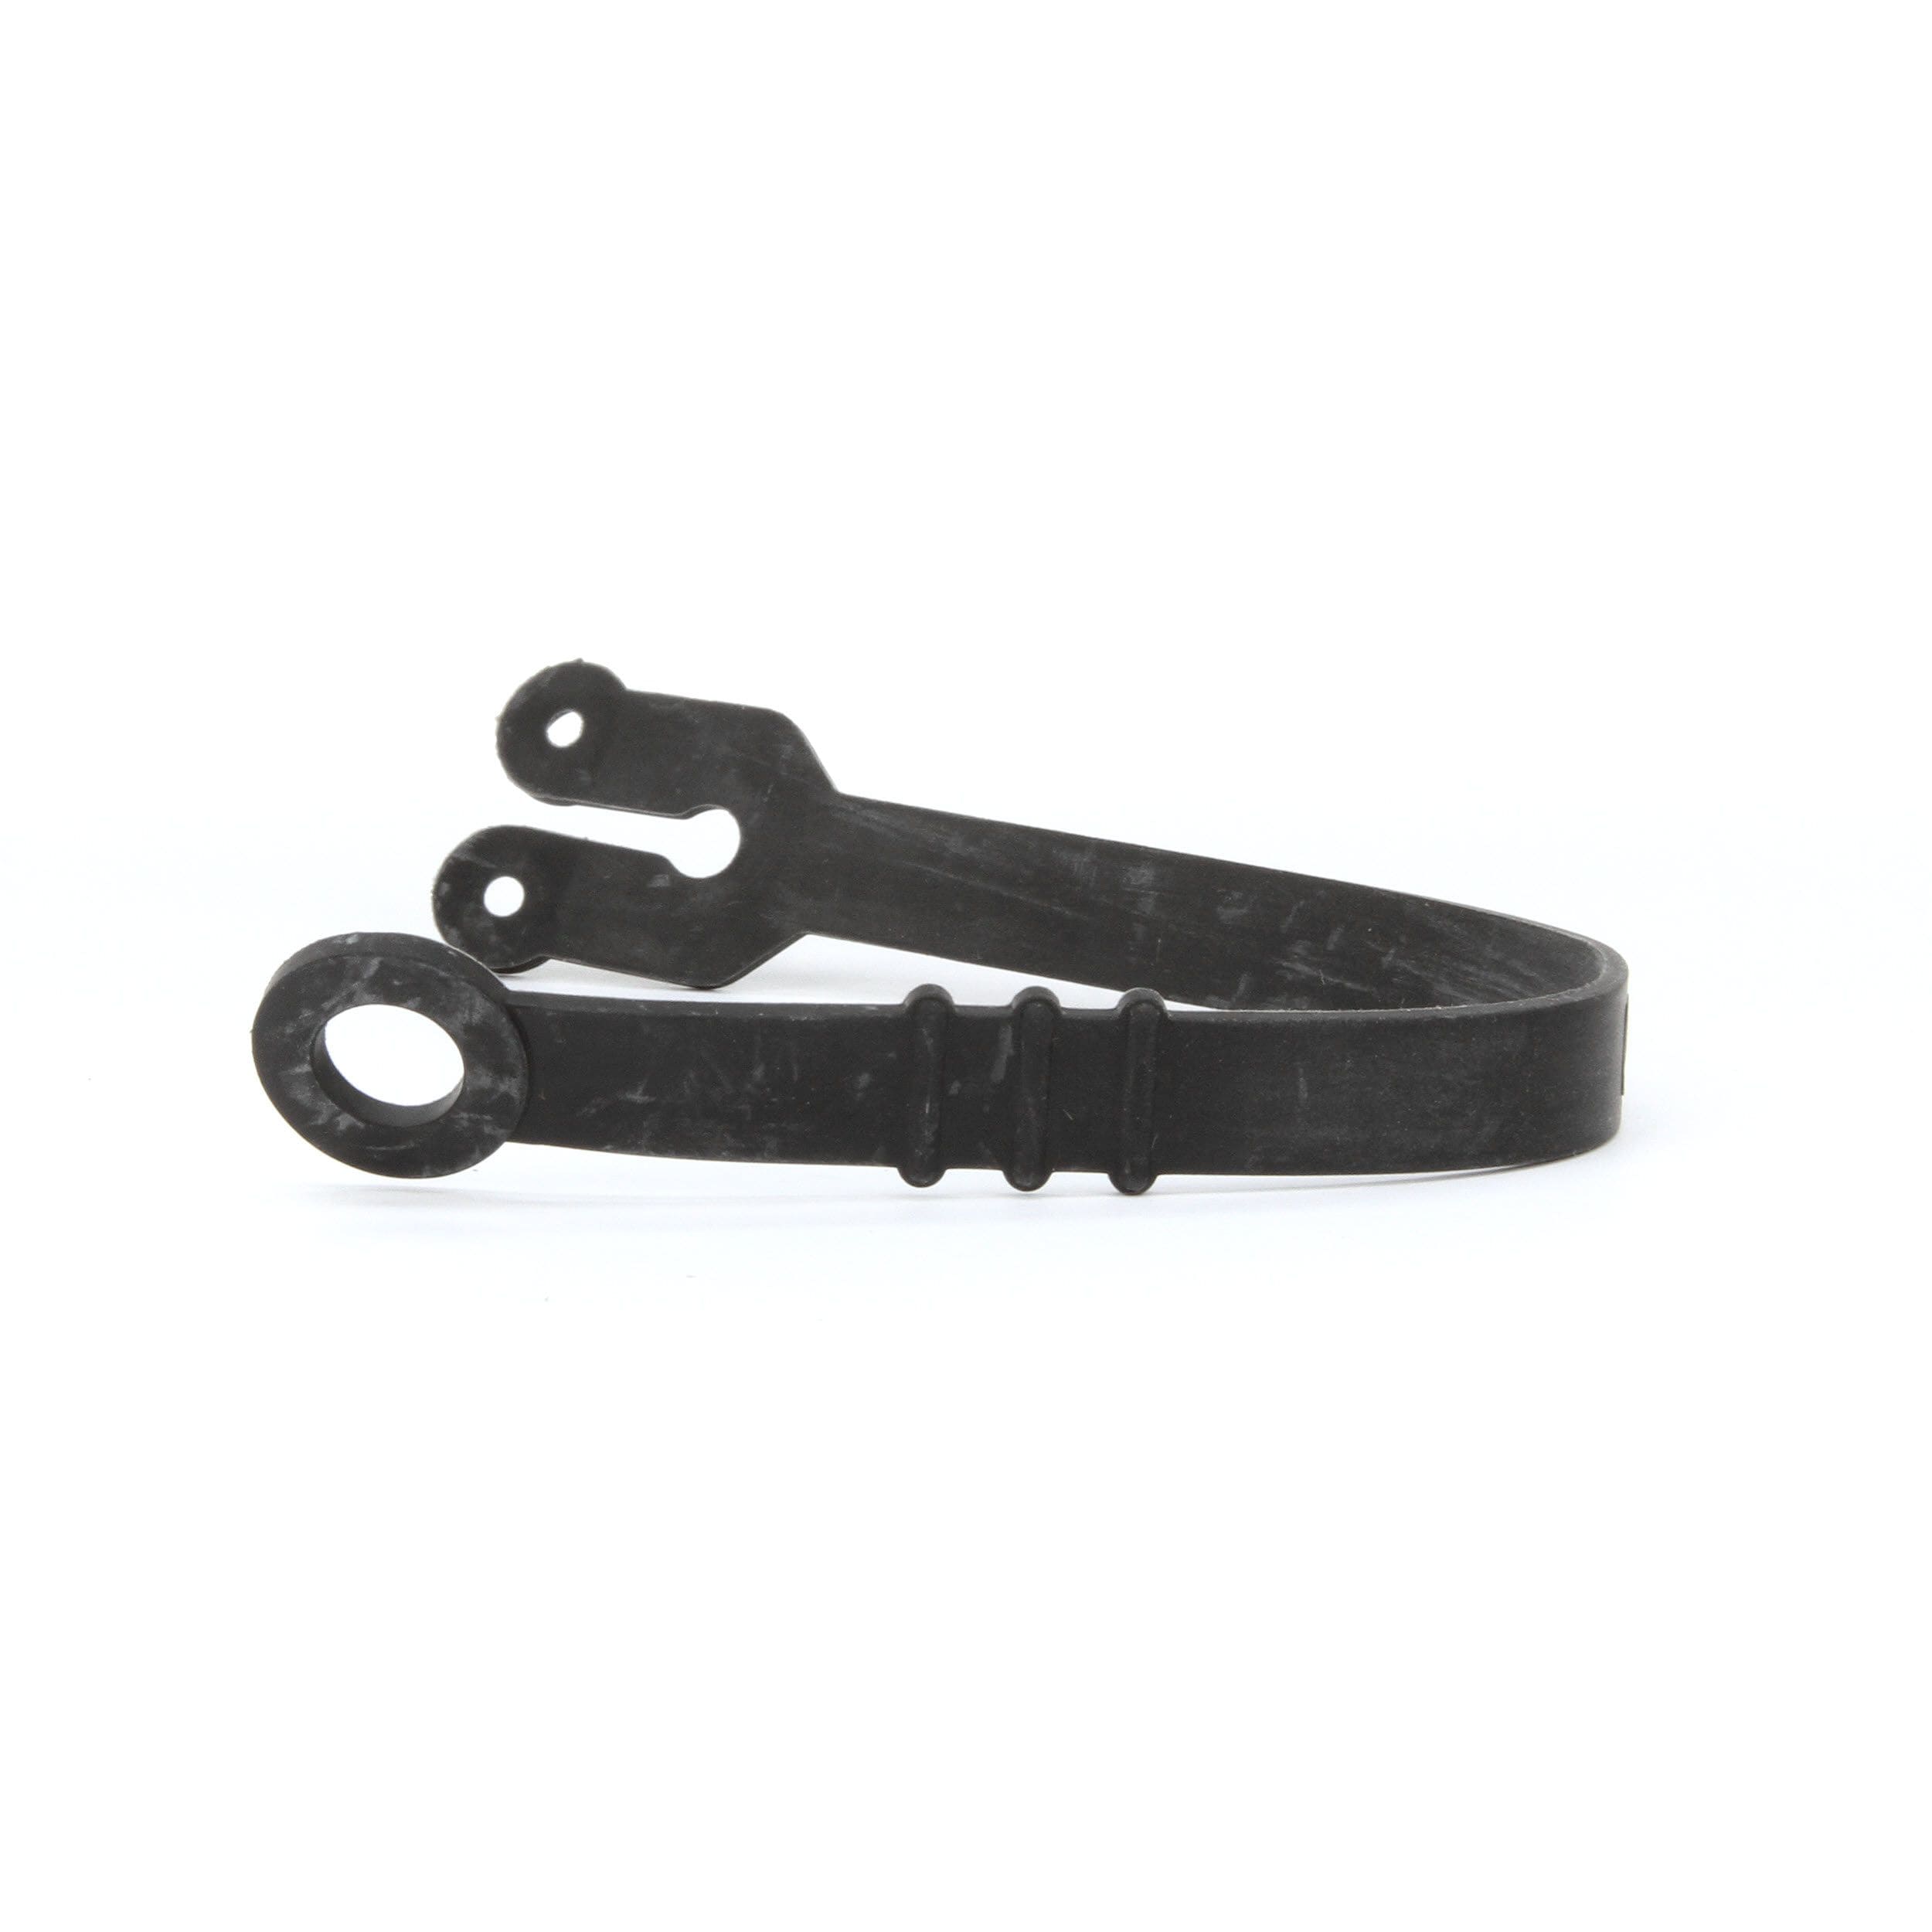 Jacobs 30253 Durable Universal Black Rubber Chuck Key Holder for sale online 